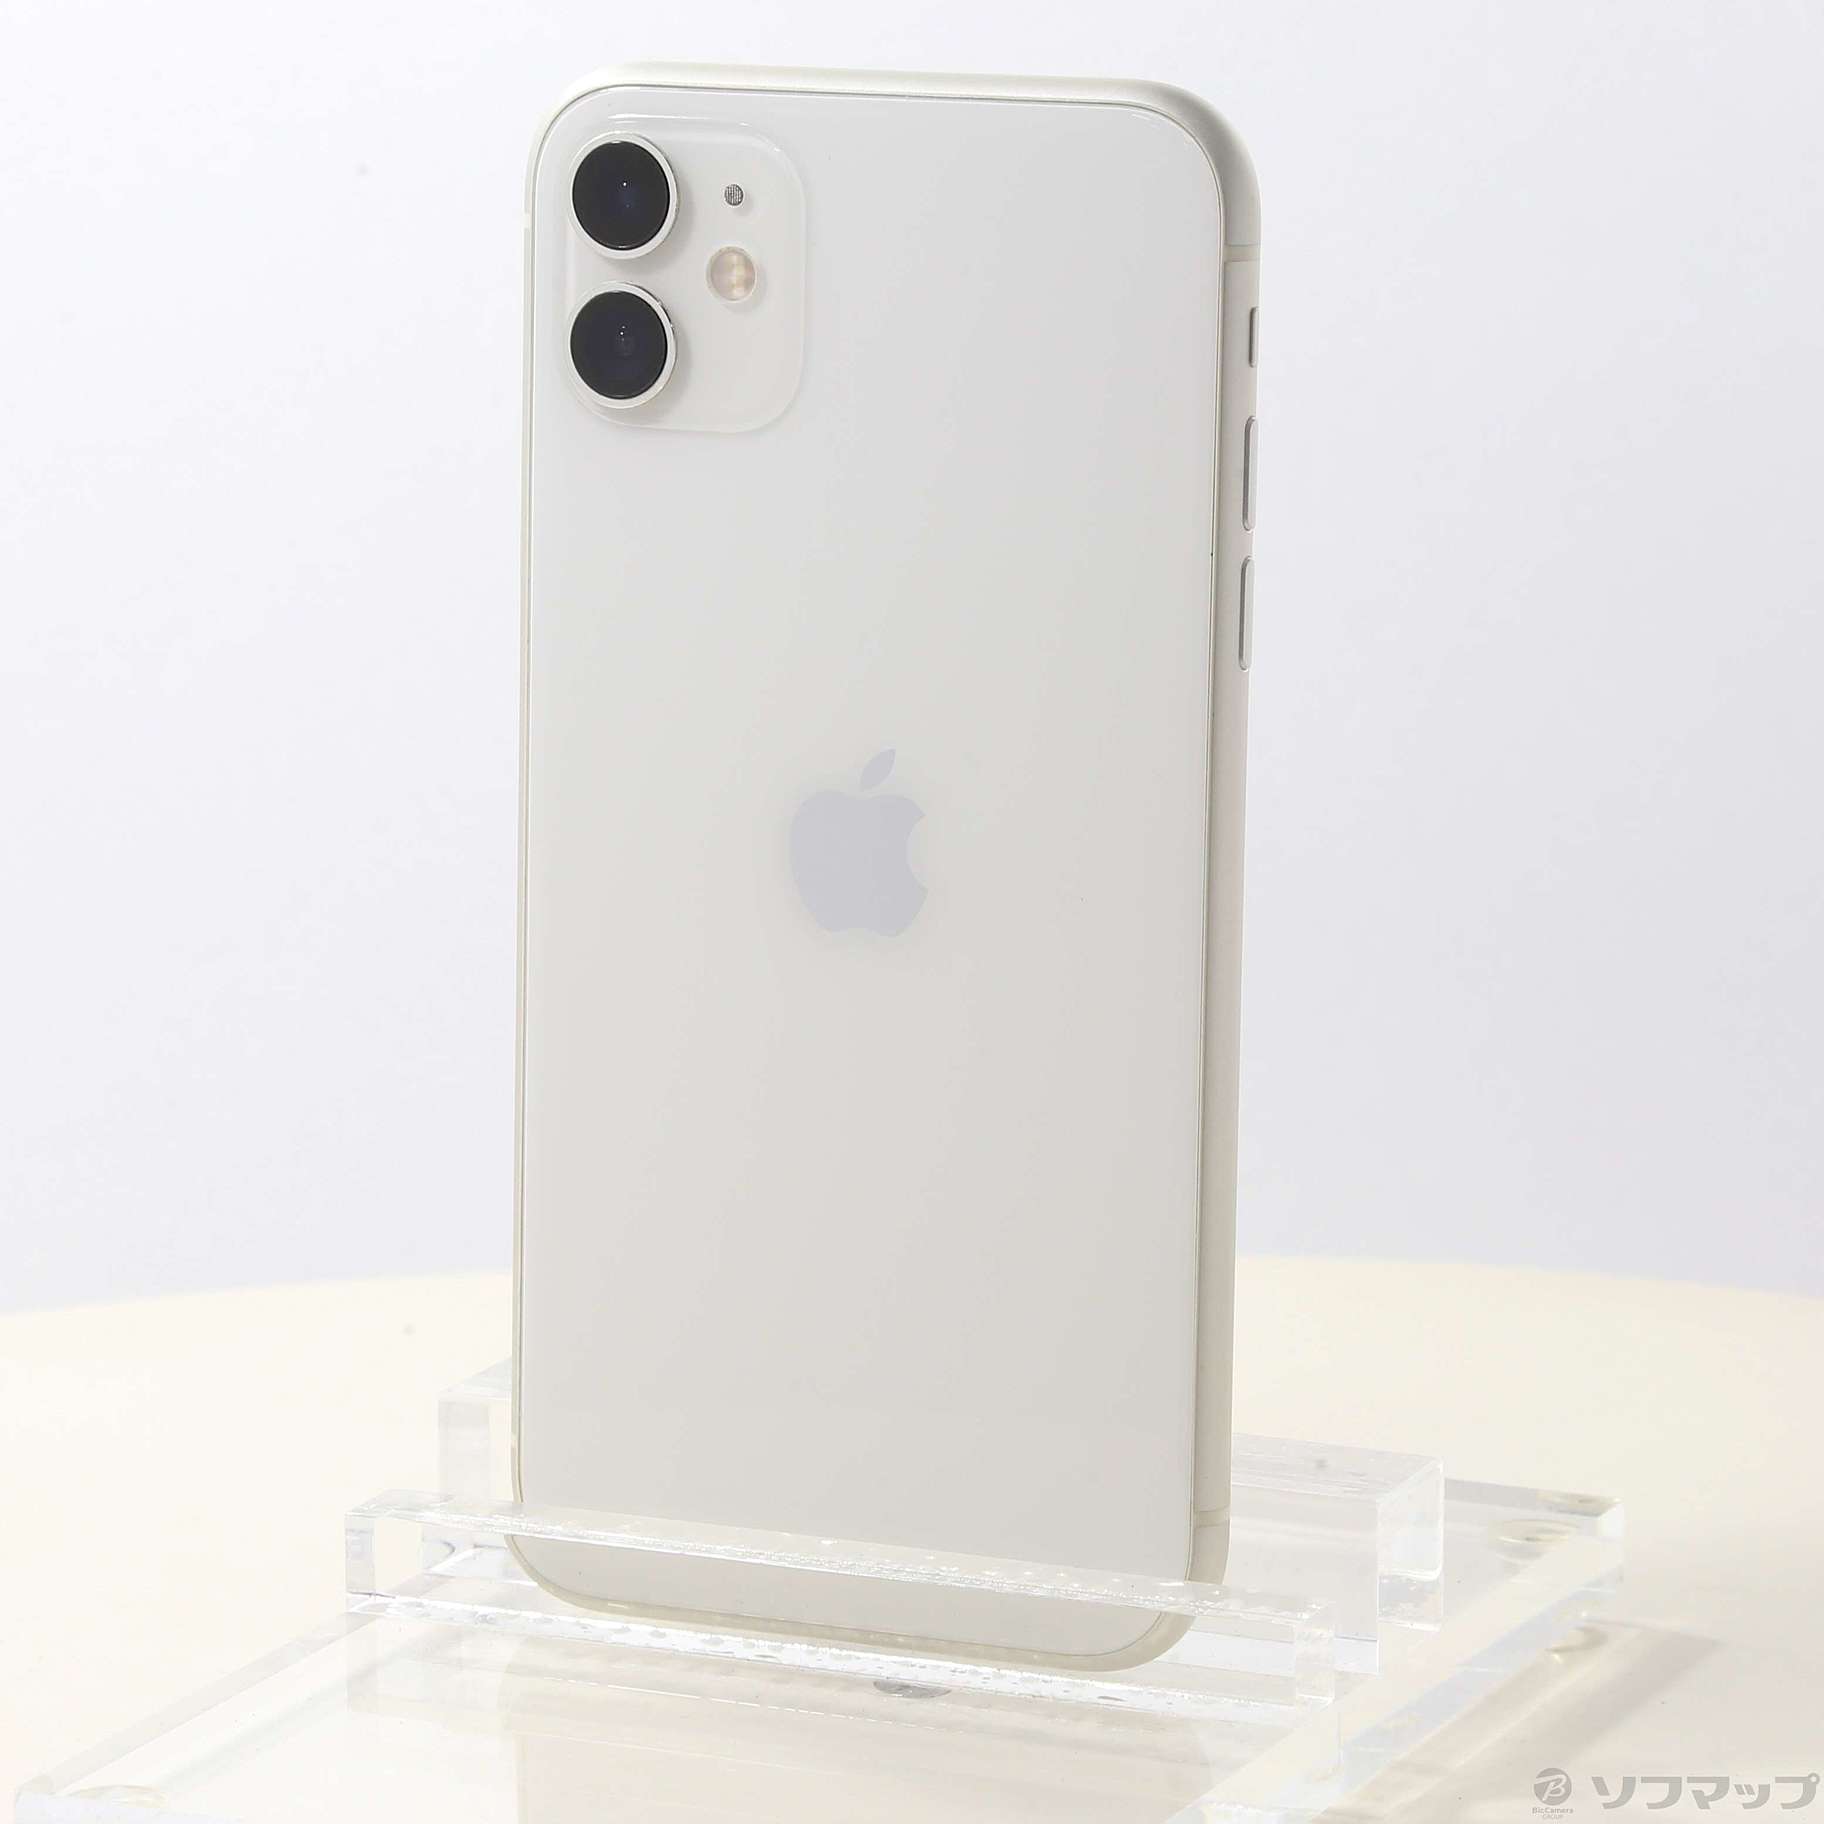 iPhone11 White 128GB simフリー